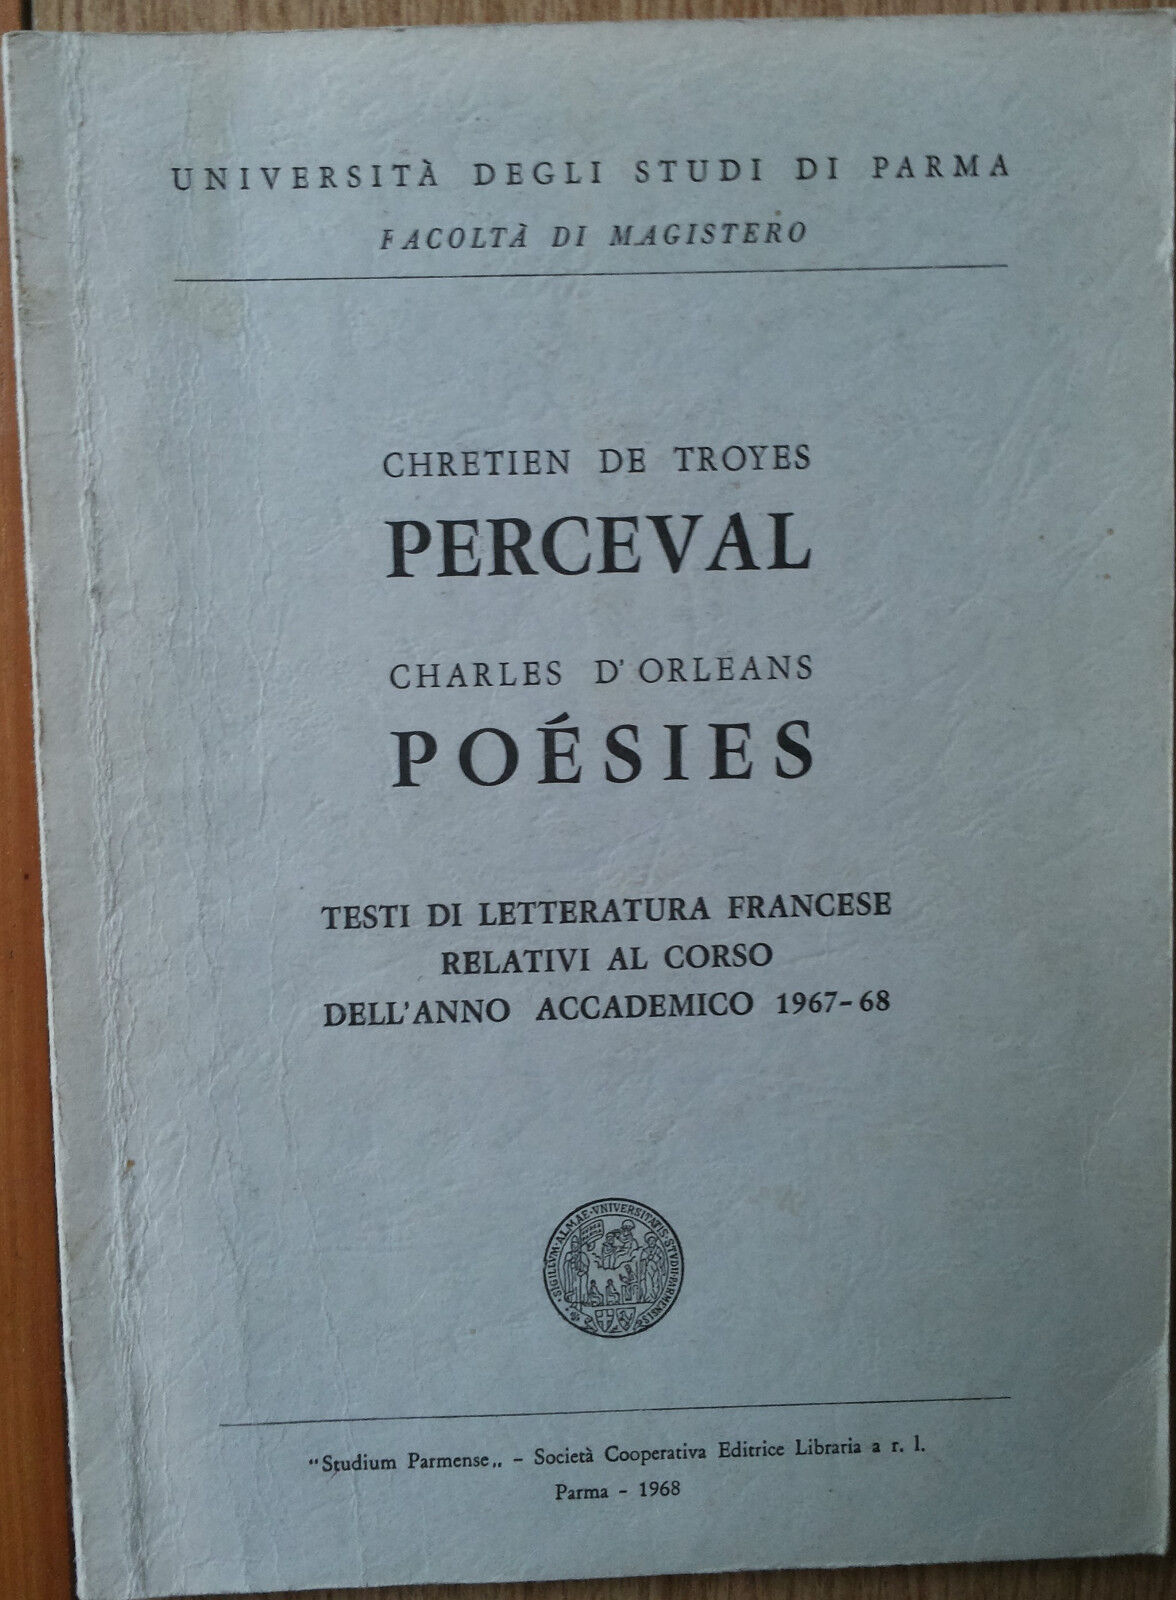 Chretien de Troyes Perceval Charles d'Orleans-AA.VV.-Studium Parmense,1968-R